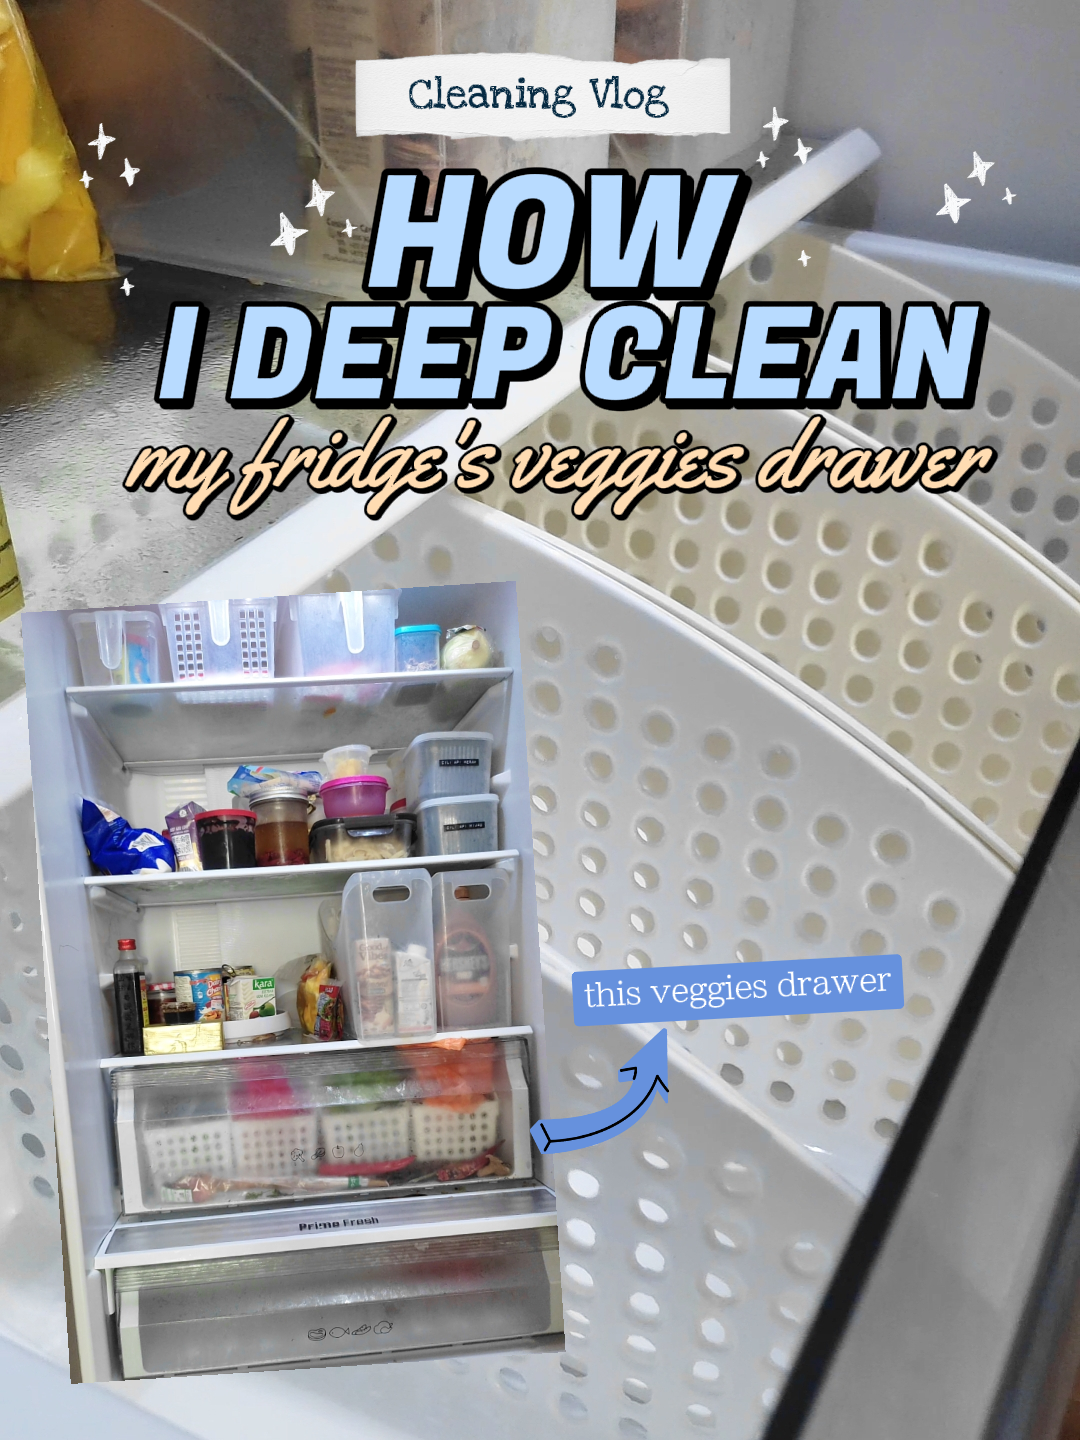 My Clean and Organized Refrigerator - Kara Creates